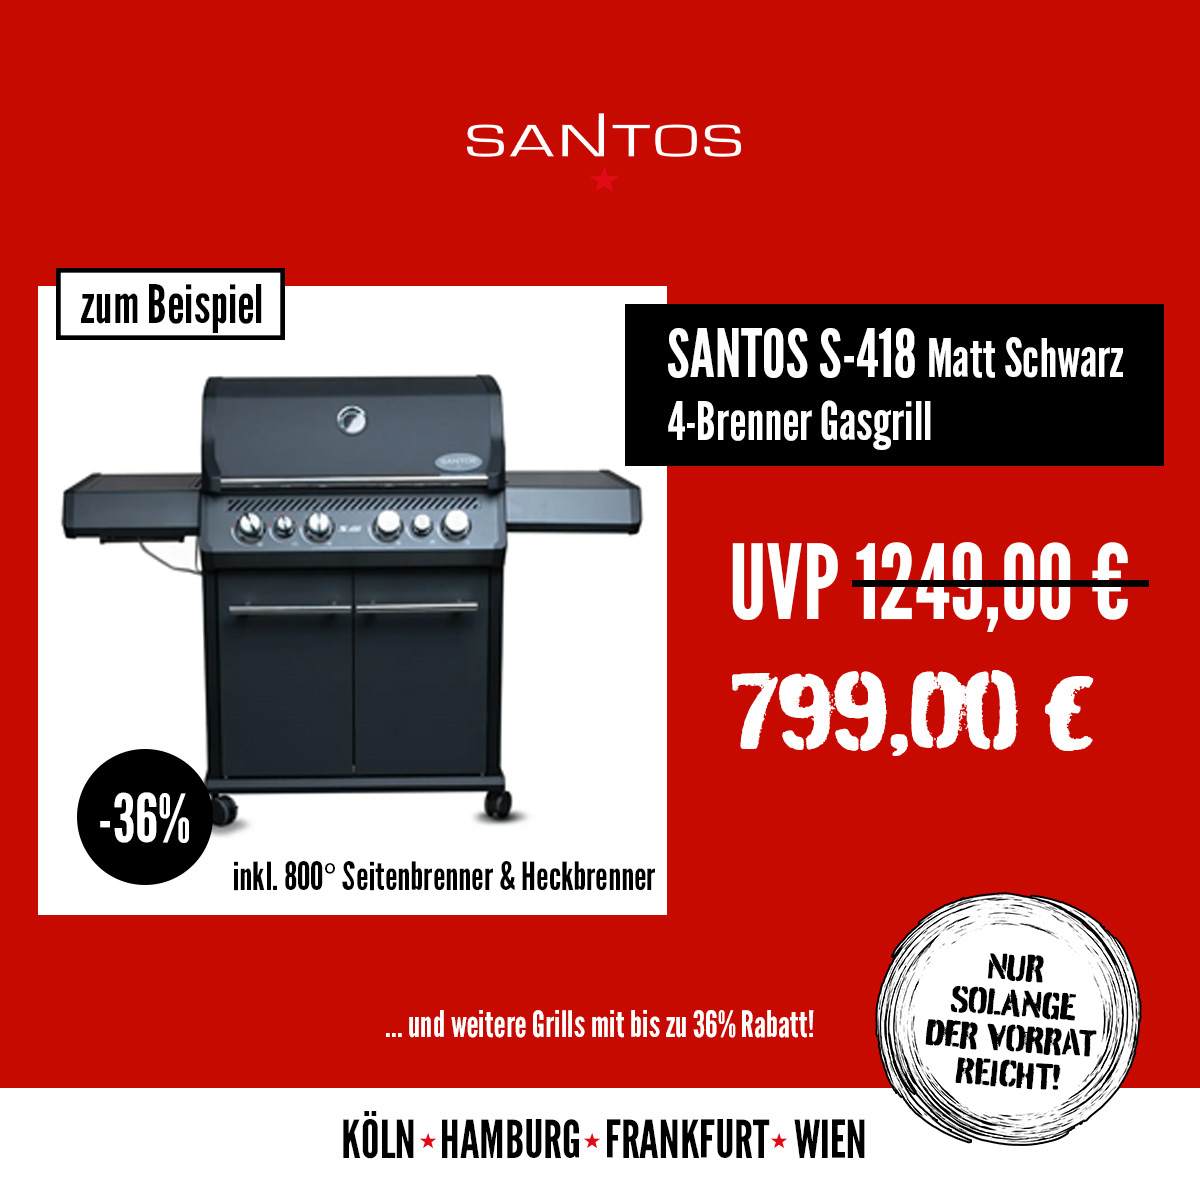 SANTOS Werksverkauf Carousel_2_V2.jpg